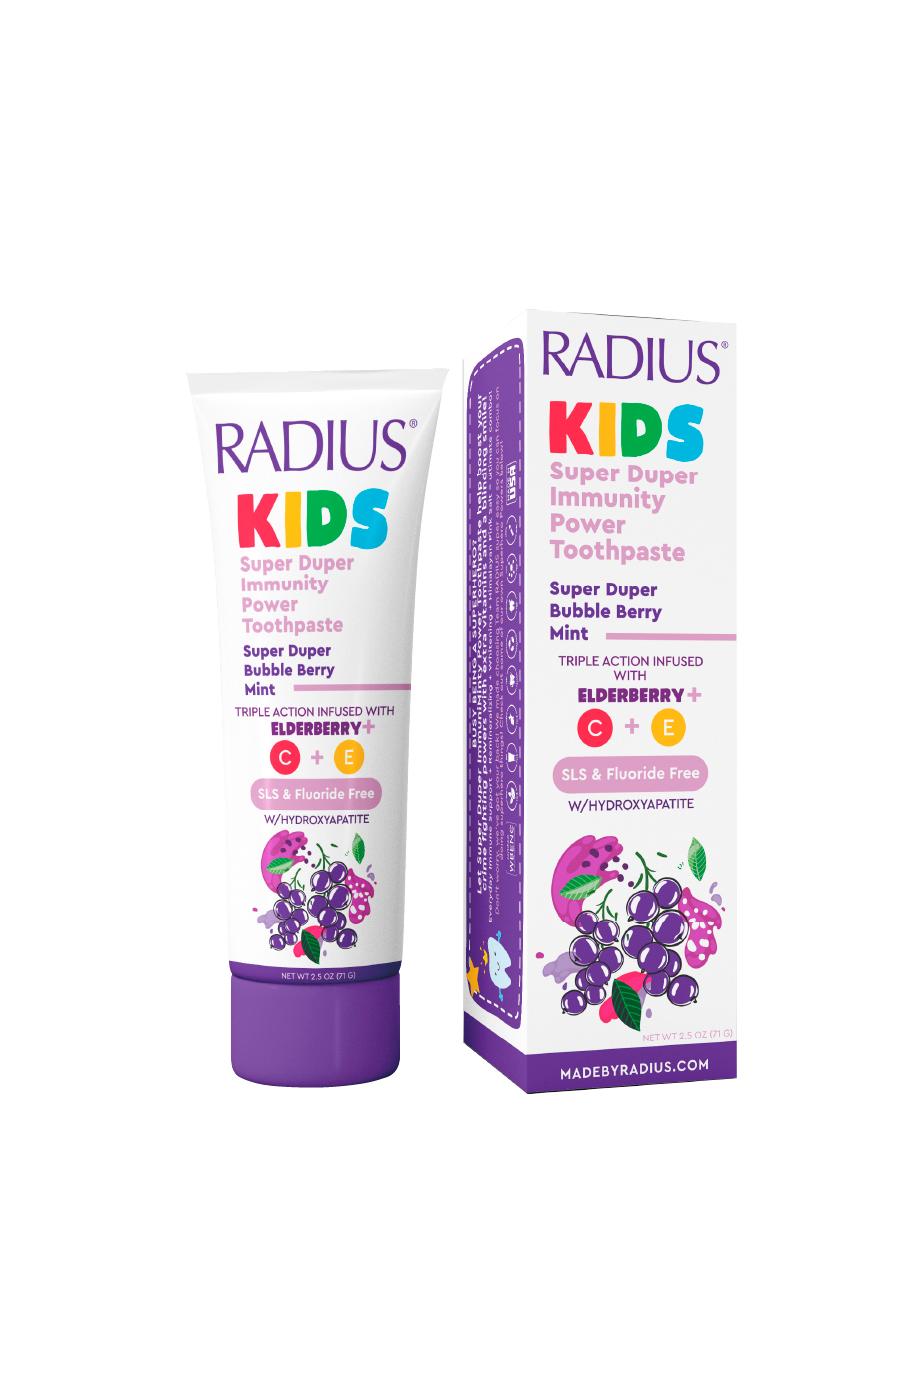 Radius Kids Immunity Power Toothpaste - Super Duper Bubble Berry Mint; image 3 of 3